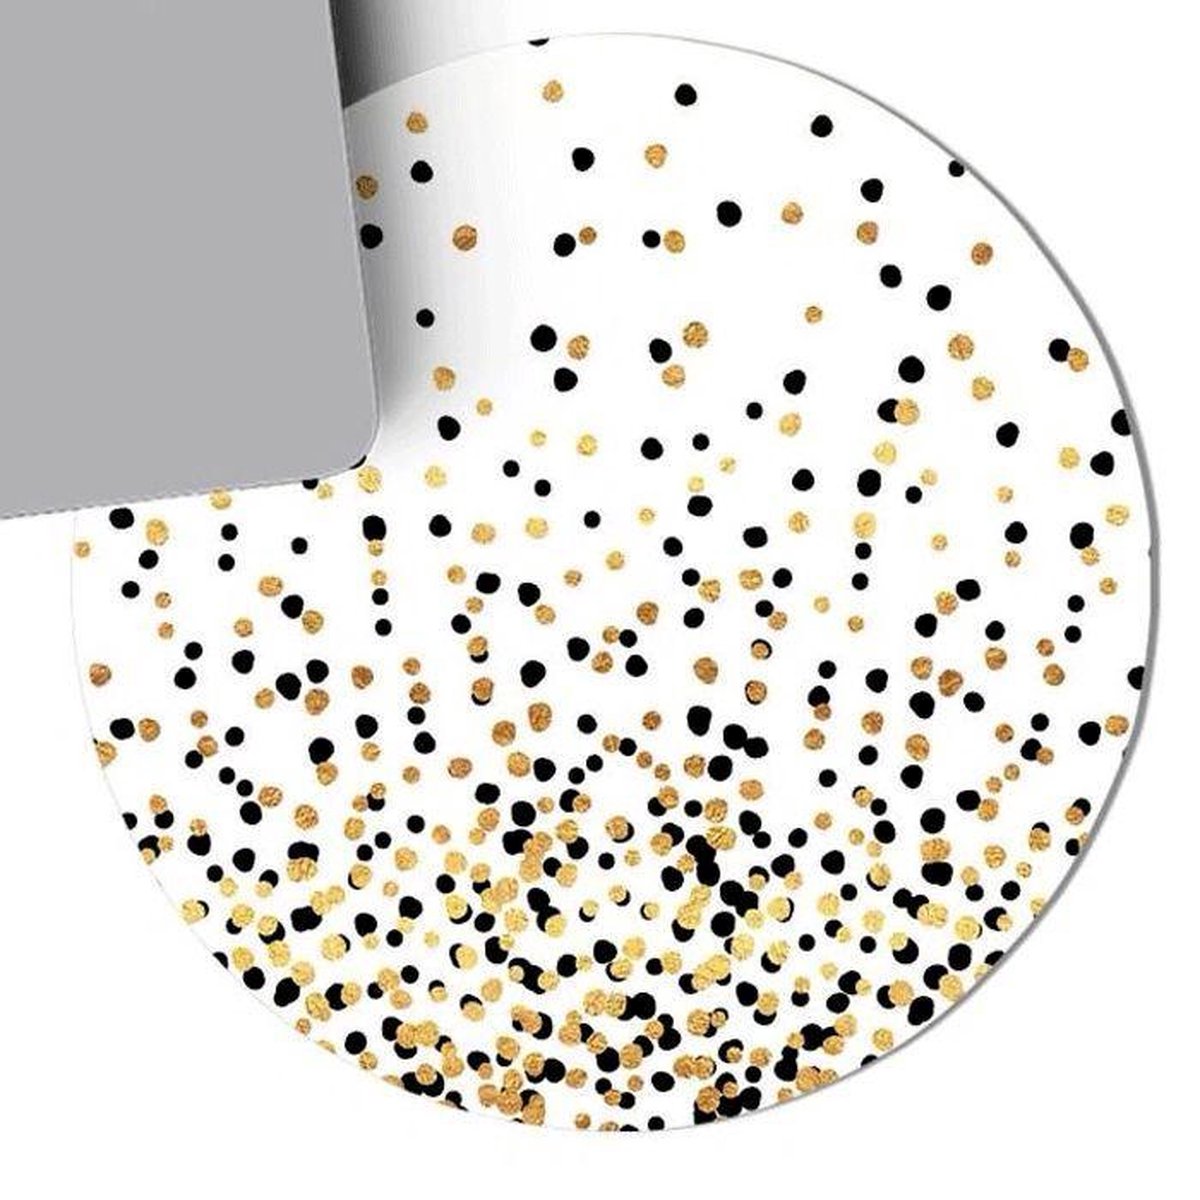 Computer - muismat black and gold dots - rond - rubber - buigbaar - anti-slip - mousepad - Merkloos